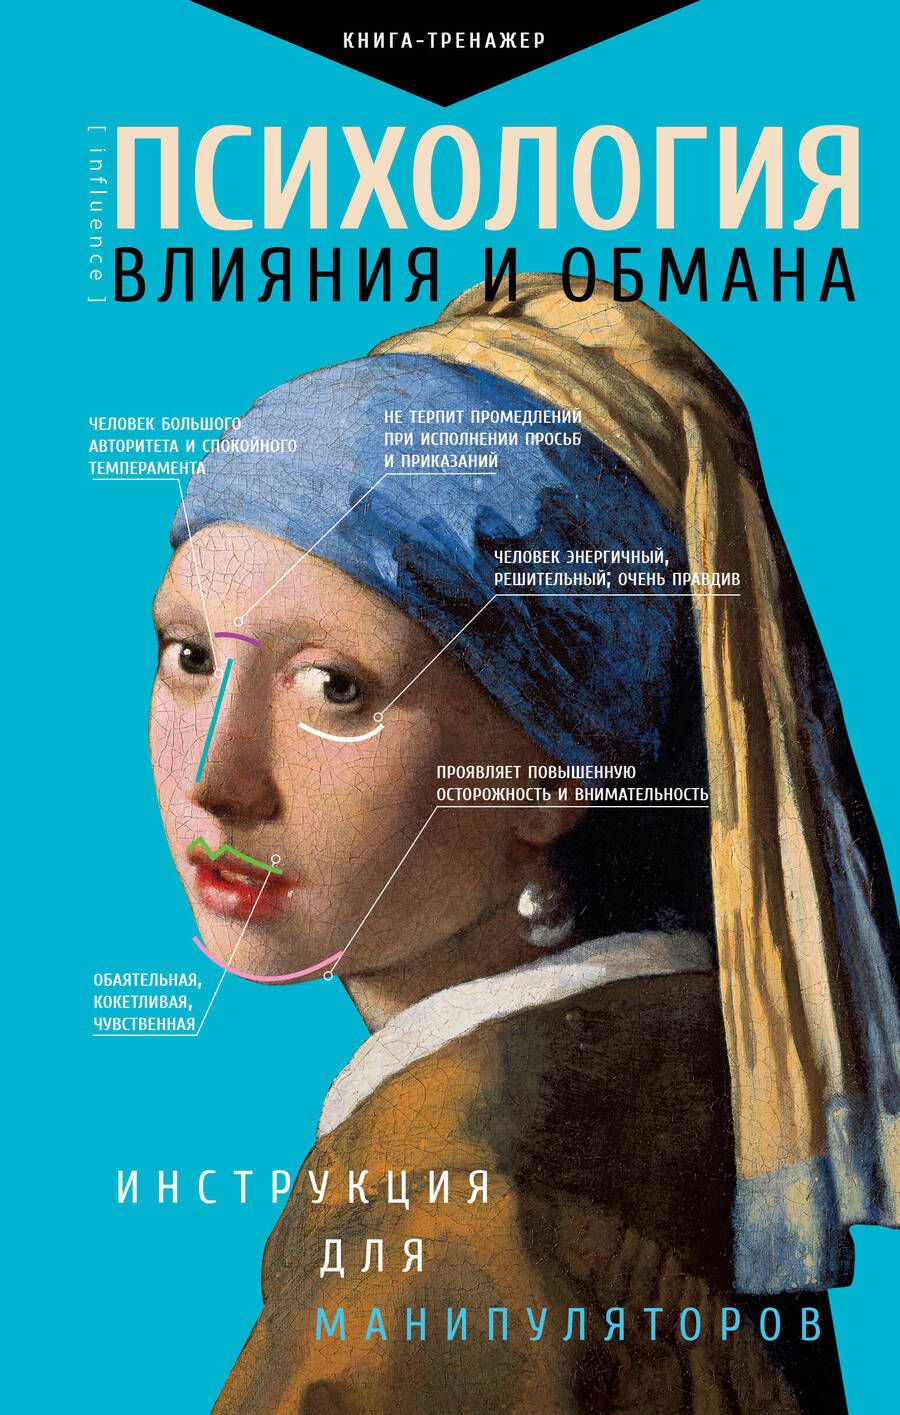 Обложка книги "Светлана Кузина: Психология влияния и обмана. Инструкция для манипулятора"